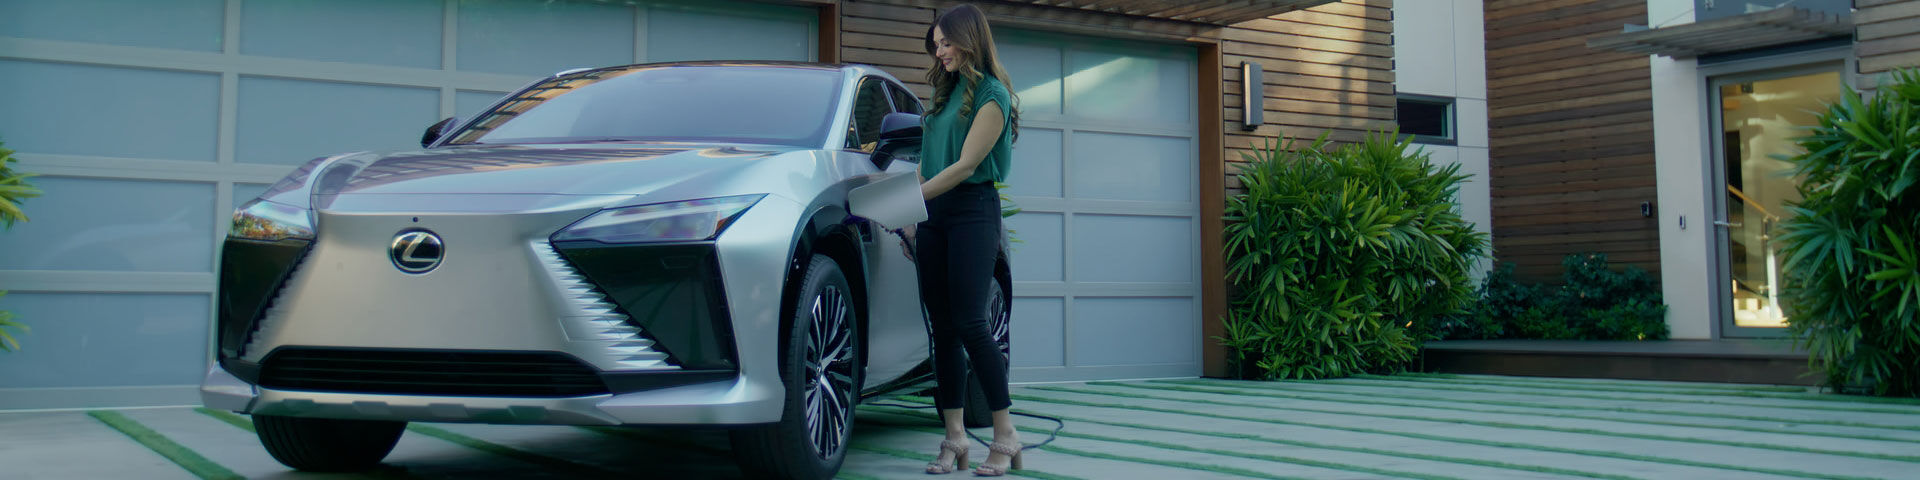 Woman charging Lexus RZ outside a house